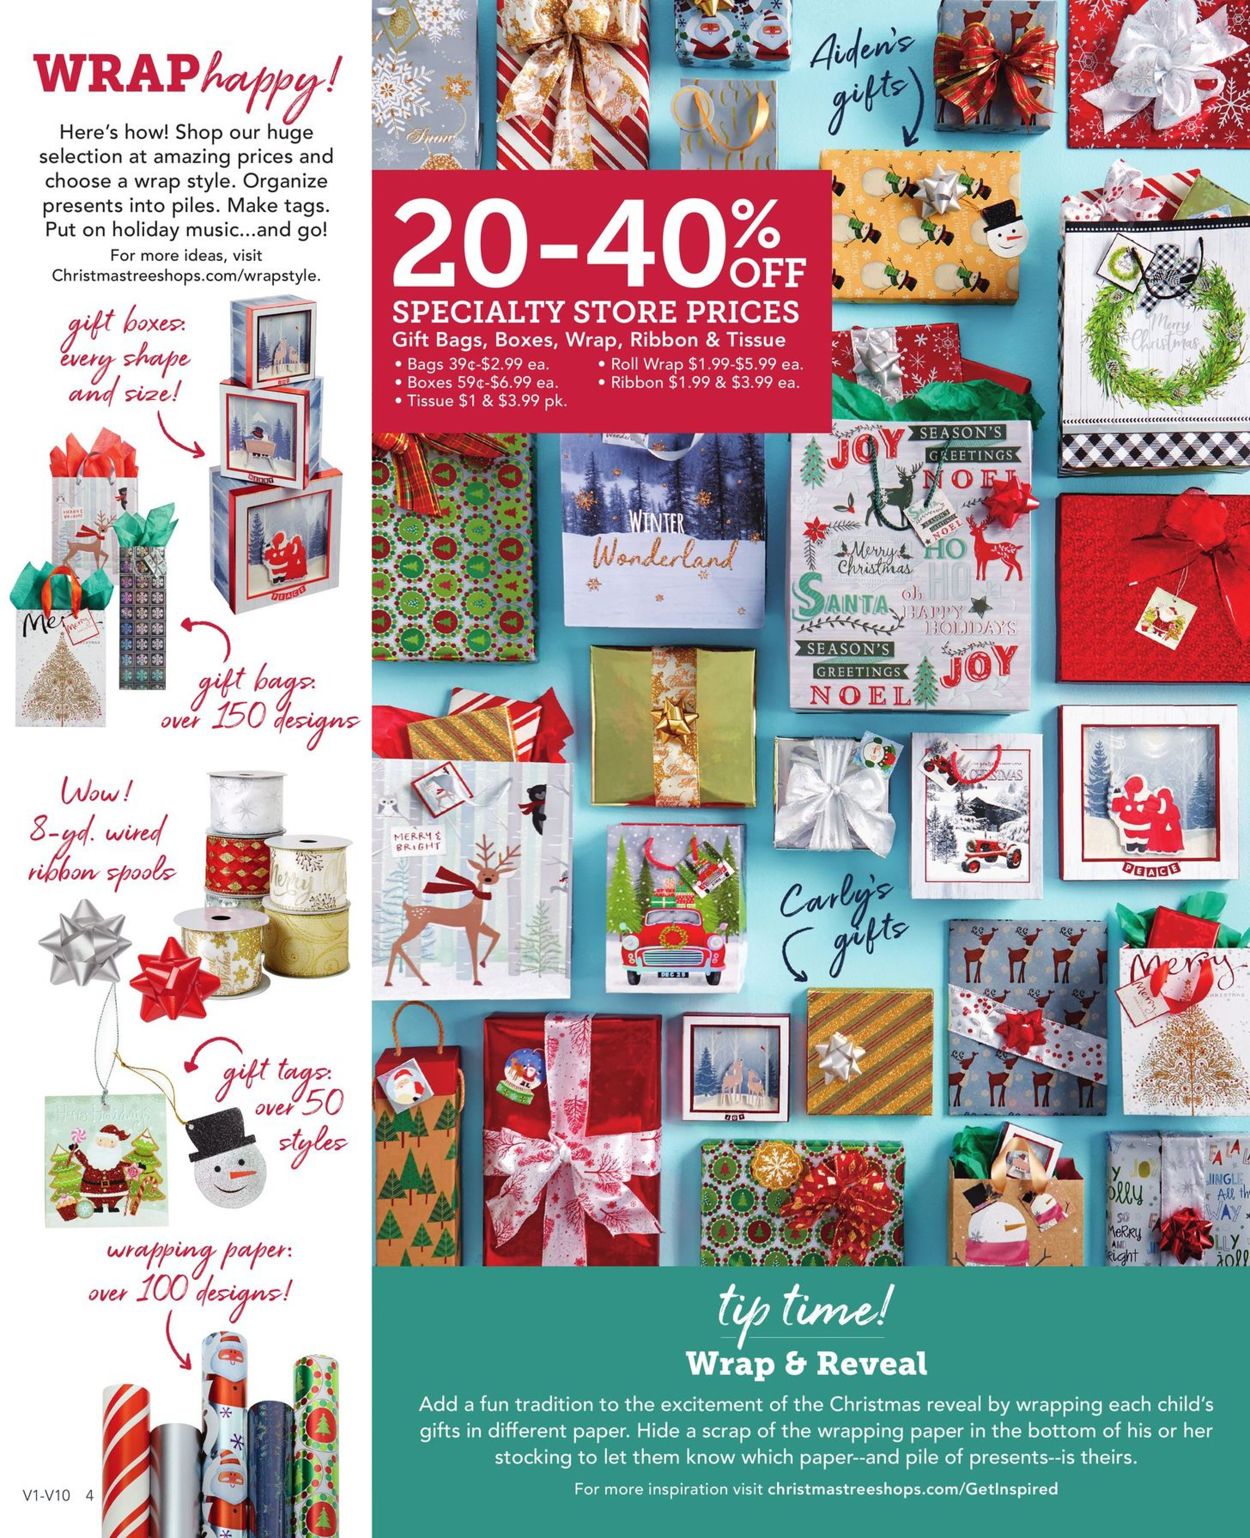 Catalogue Christmas Tree Shops - Holiday Ad 2019 from 12/02/2019